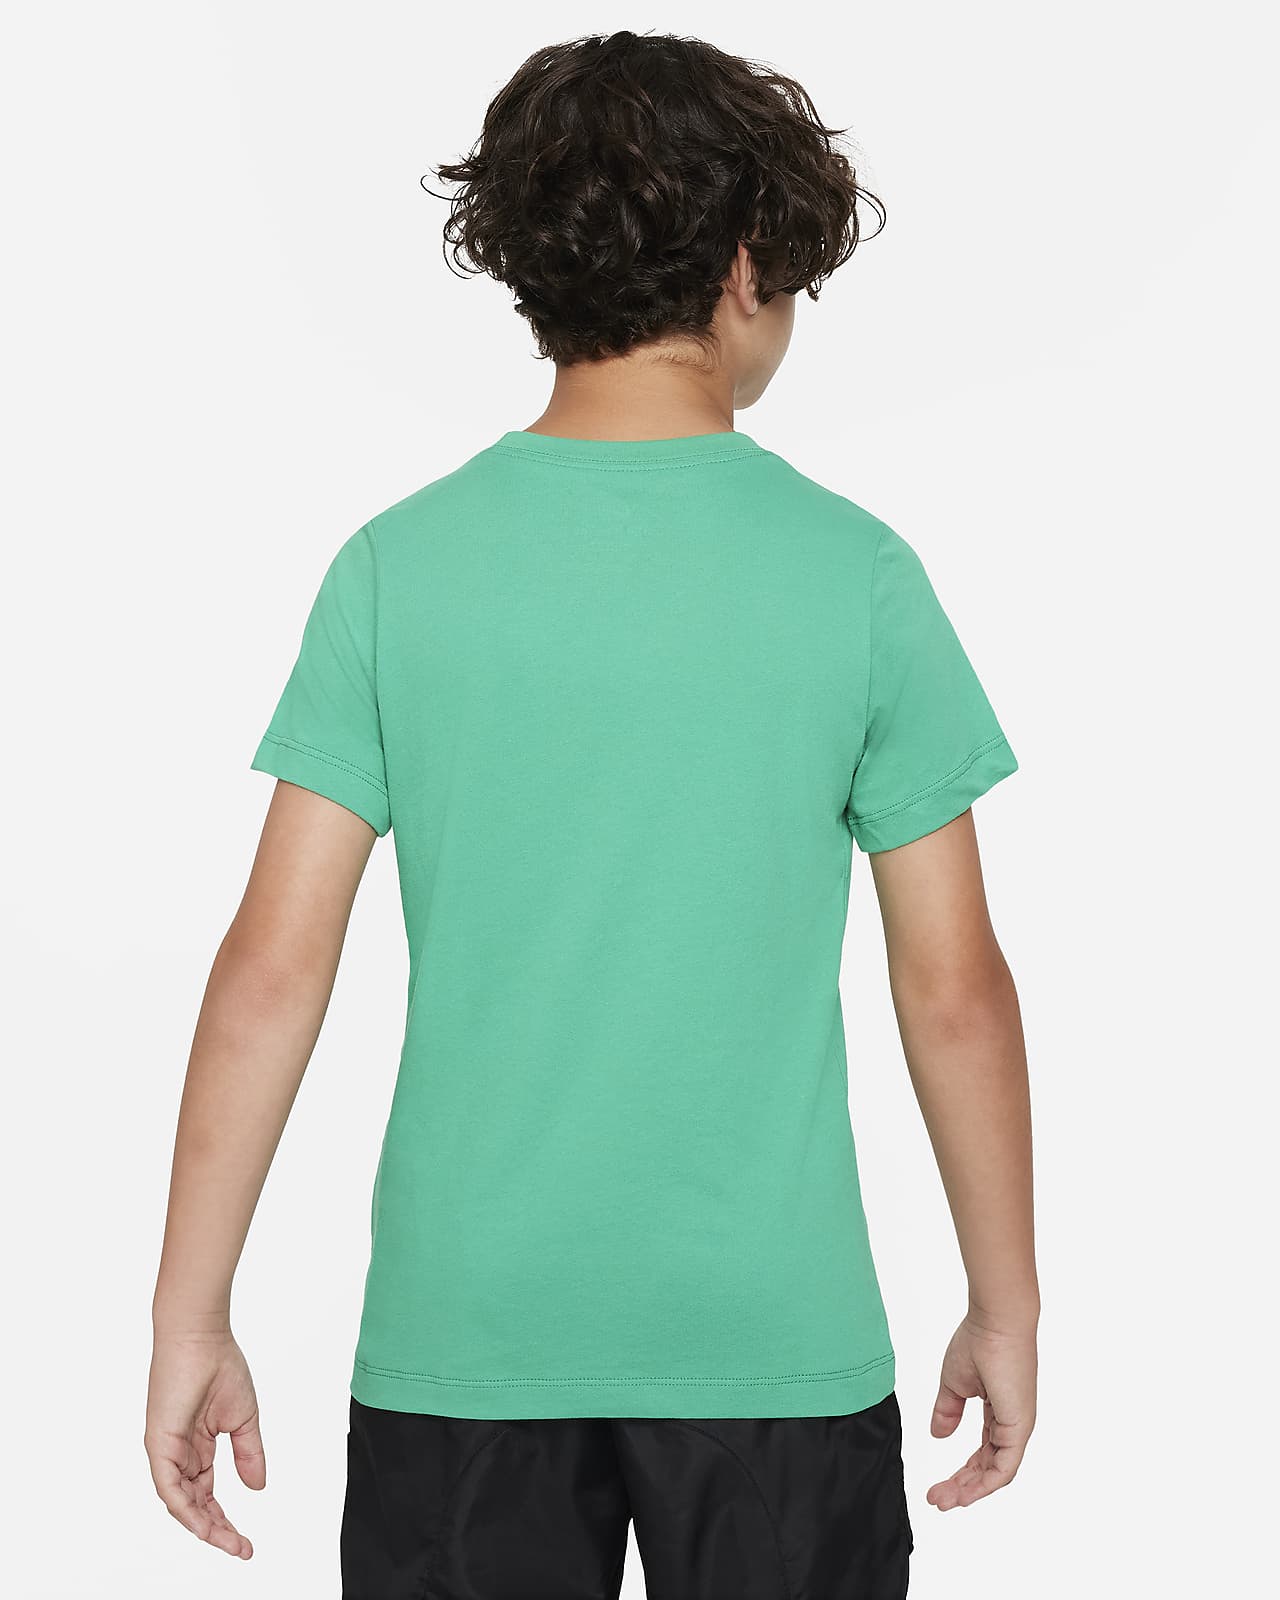 Goal Football Print Round Neck T-shirt Tees Tops Soft Comfortable